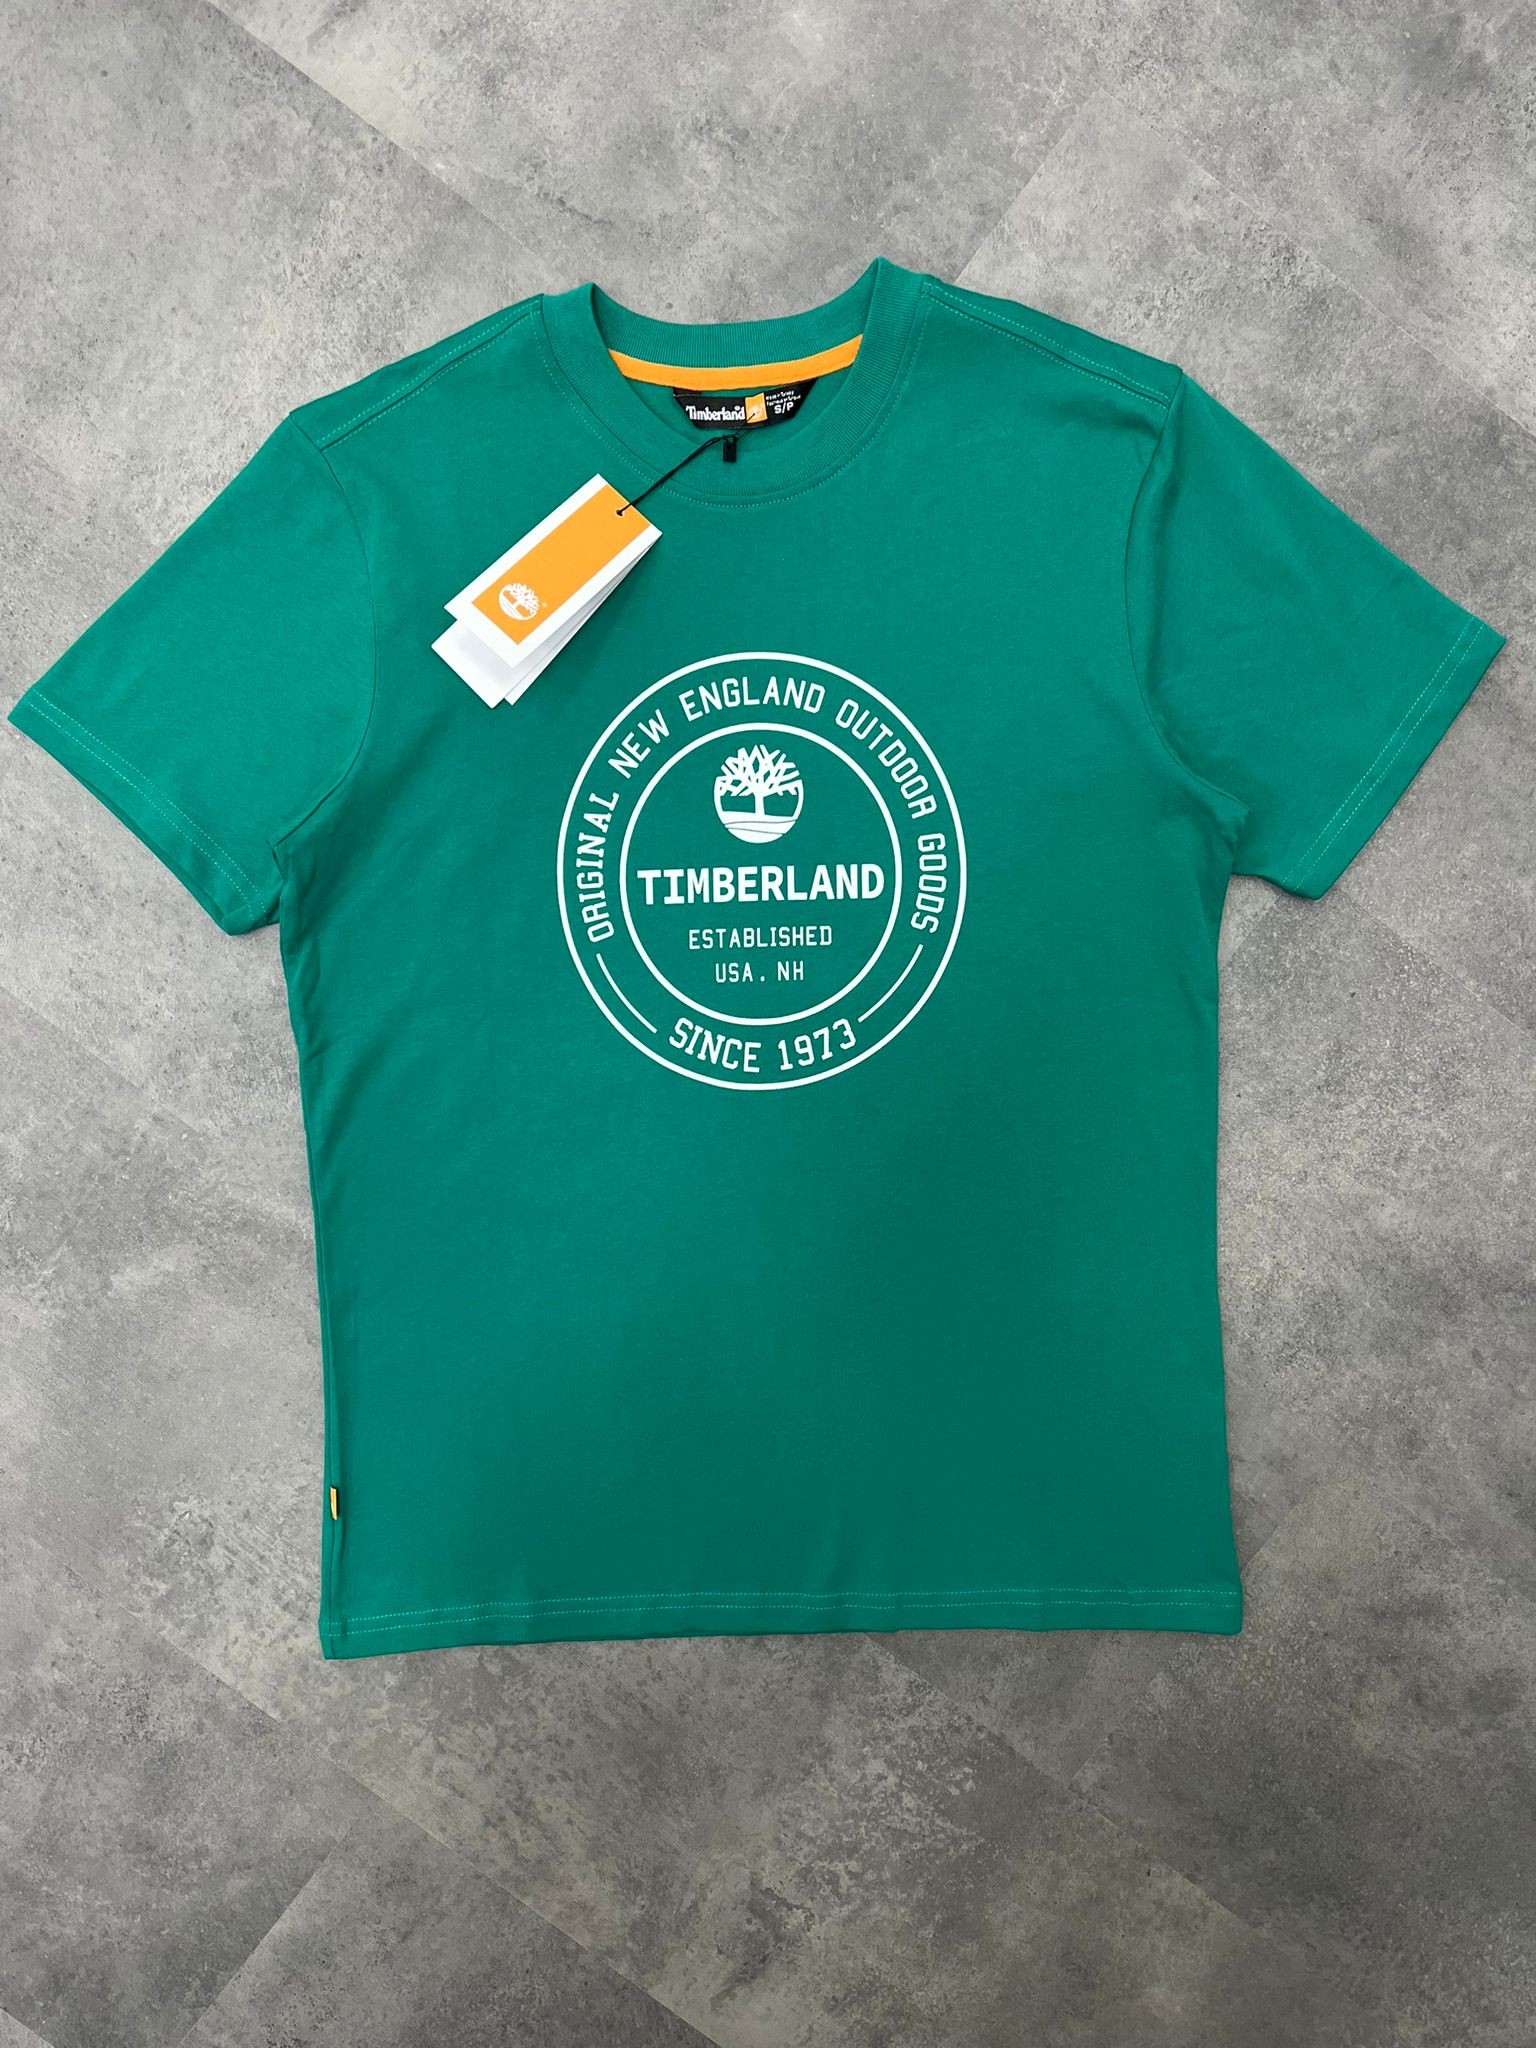 Yeni Sezon Orıgınal Sınce 1973 Green T-shirt